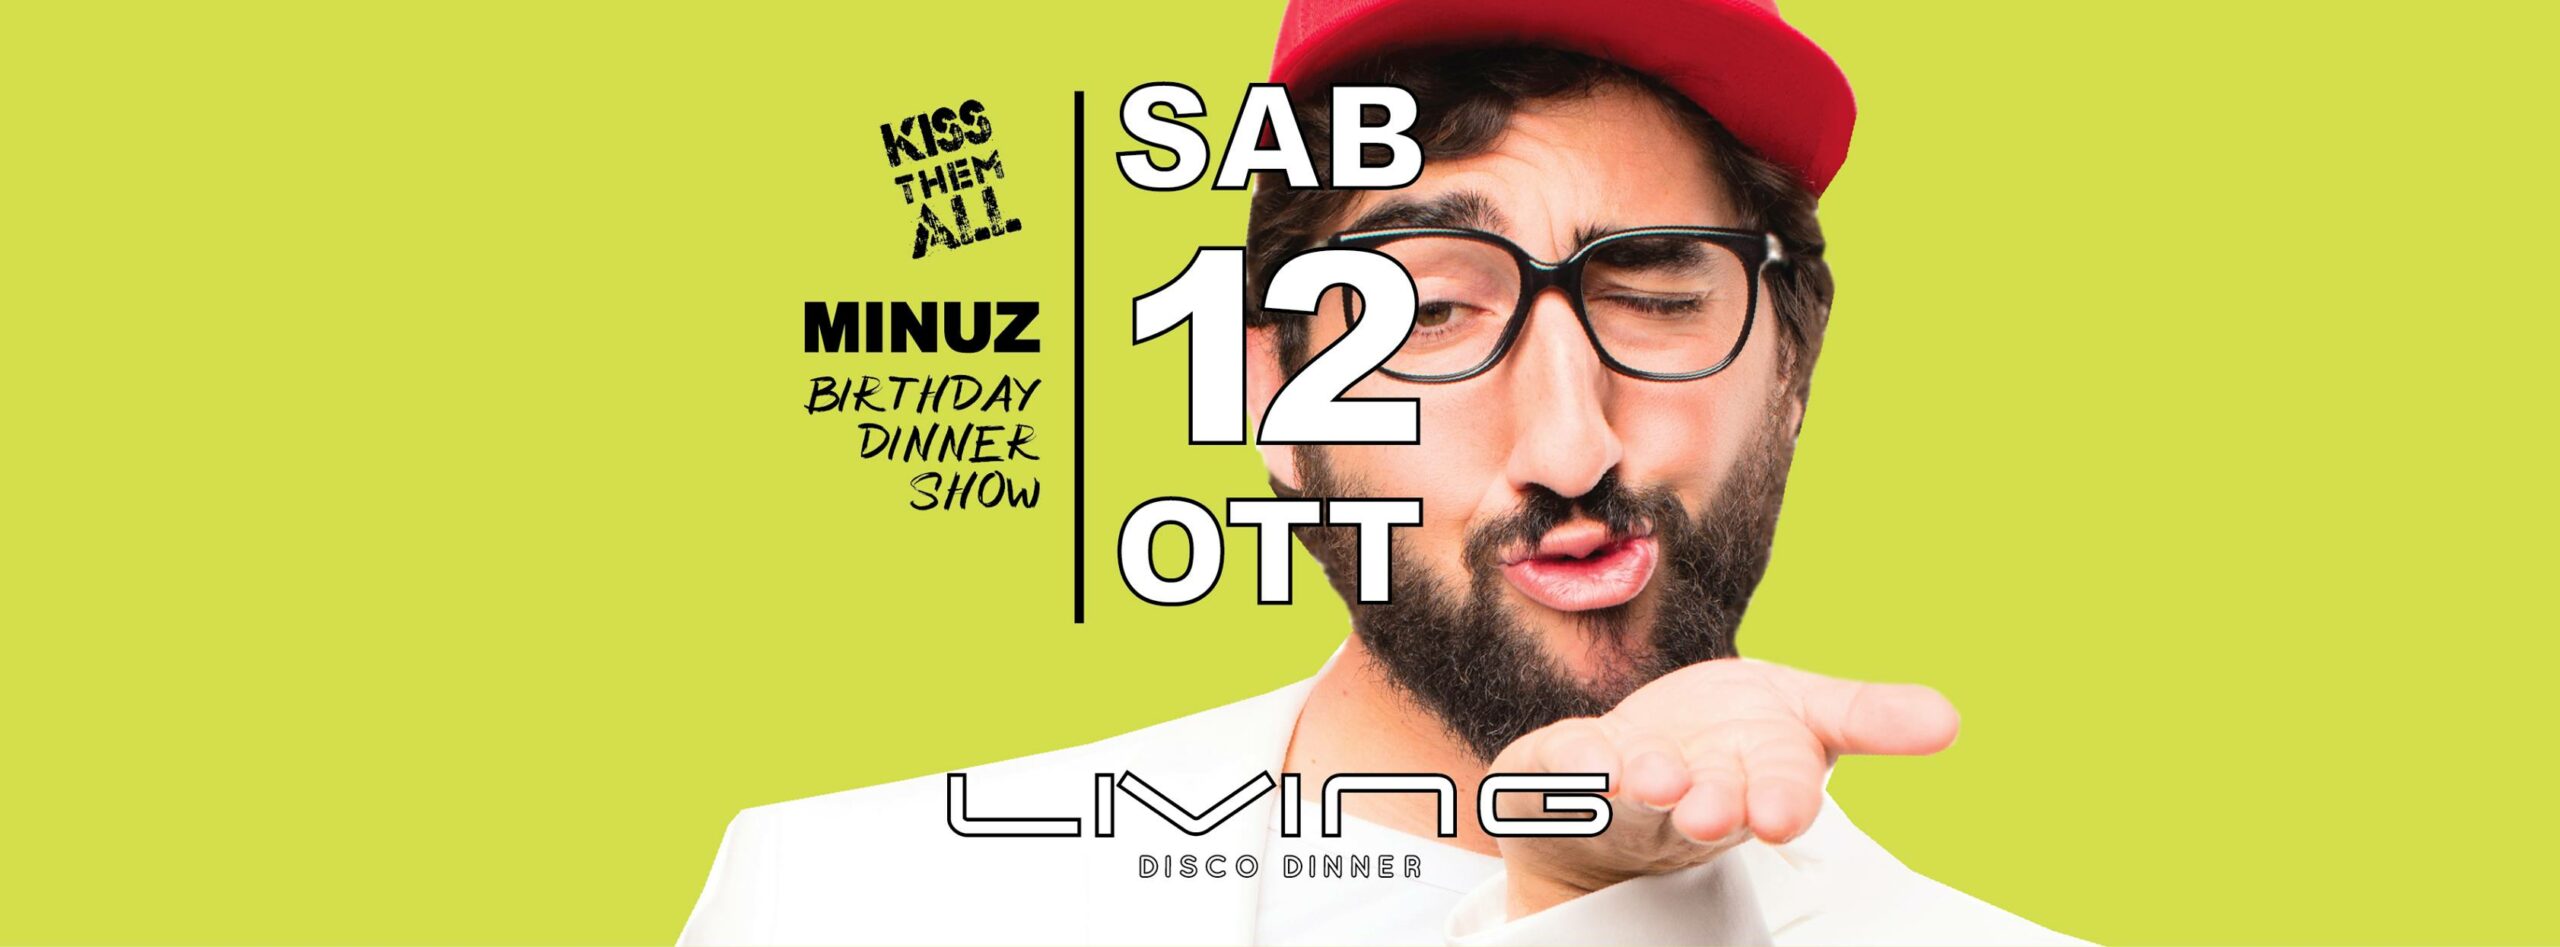 Minuz birthday dinner show Living Misano Adriatico